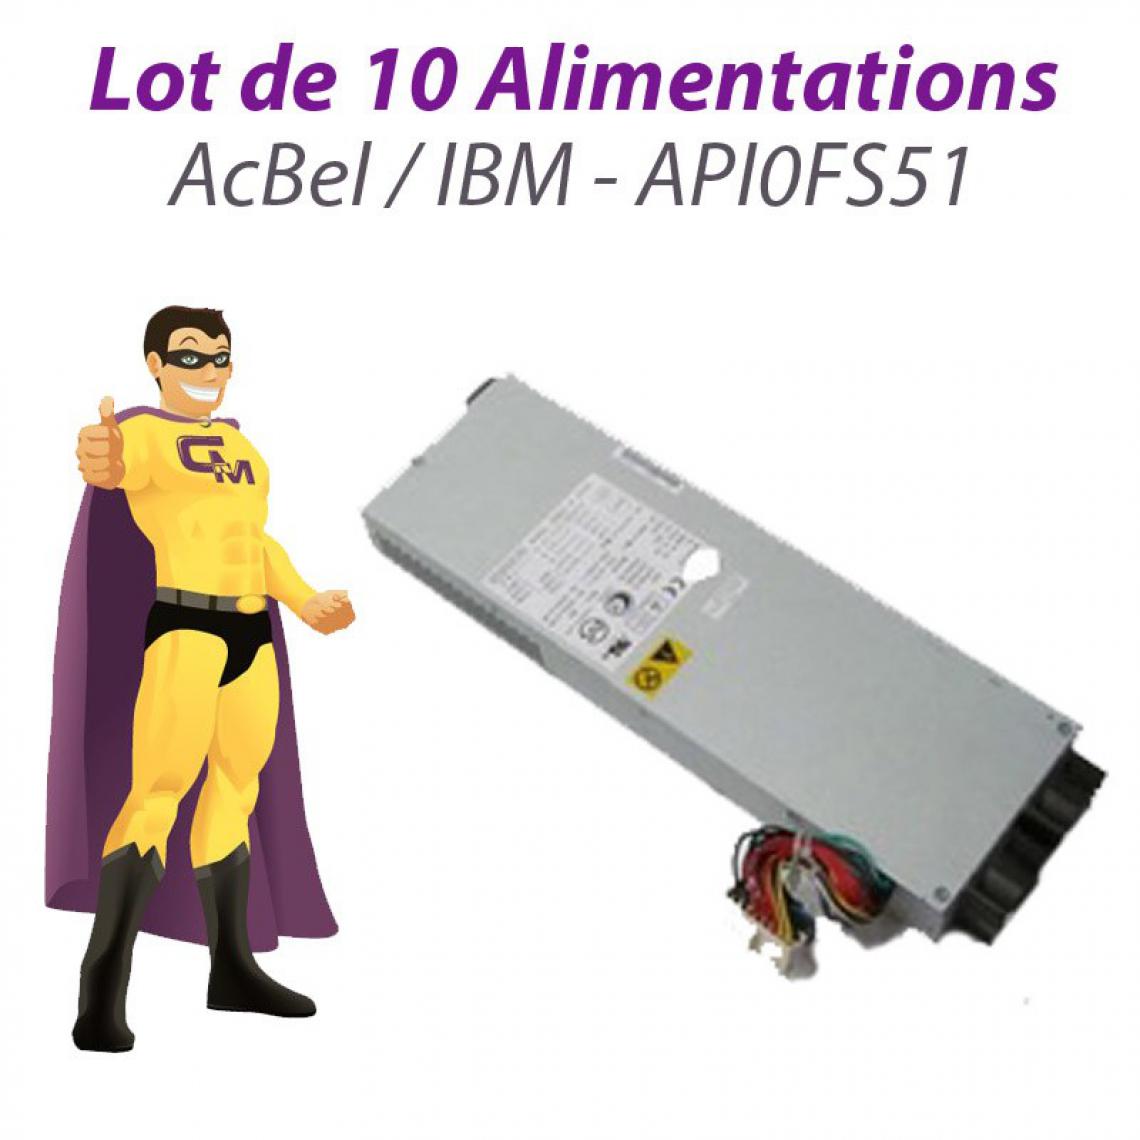 Acbel - Lot x10 Alimentations AcBel API0FS51 IBM 24P6815 24P6899 eServer xSeries 330 - Alimentation modulaire